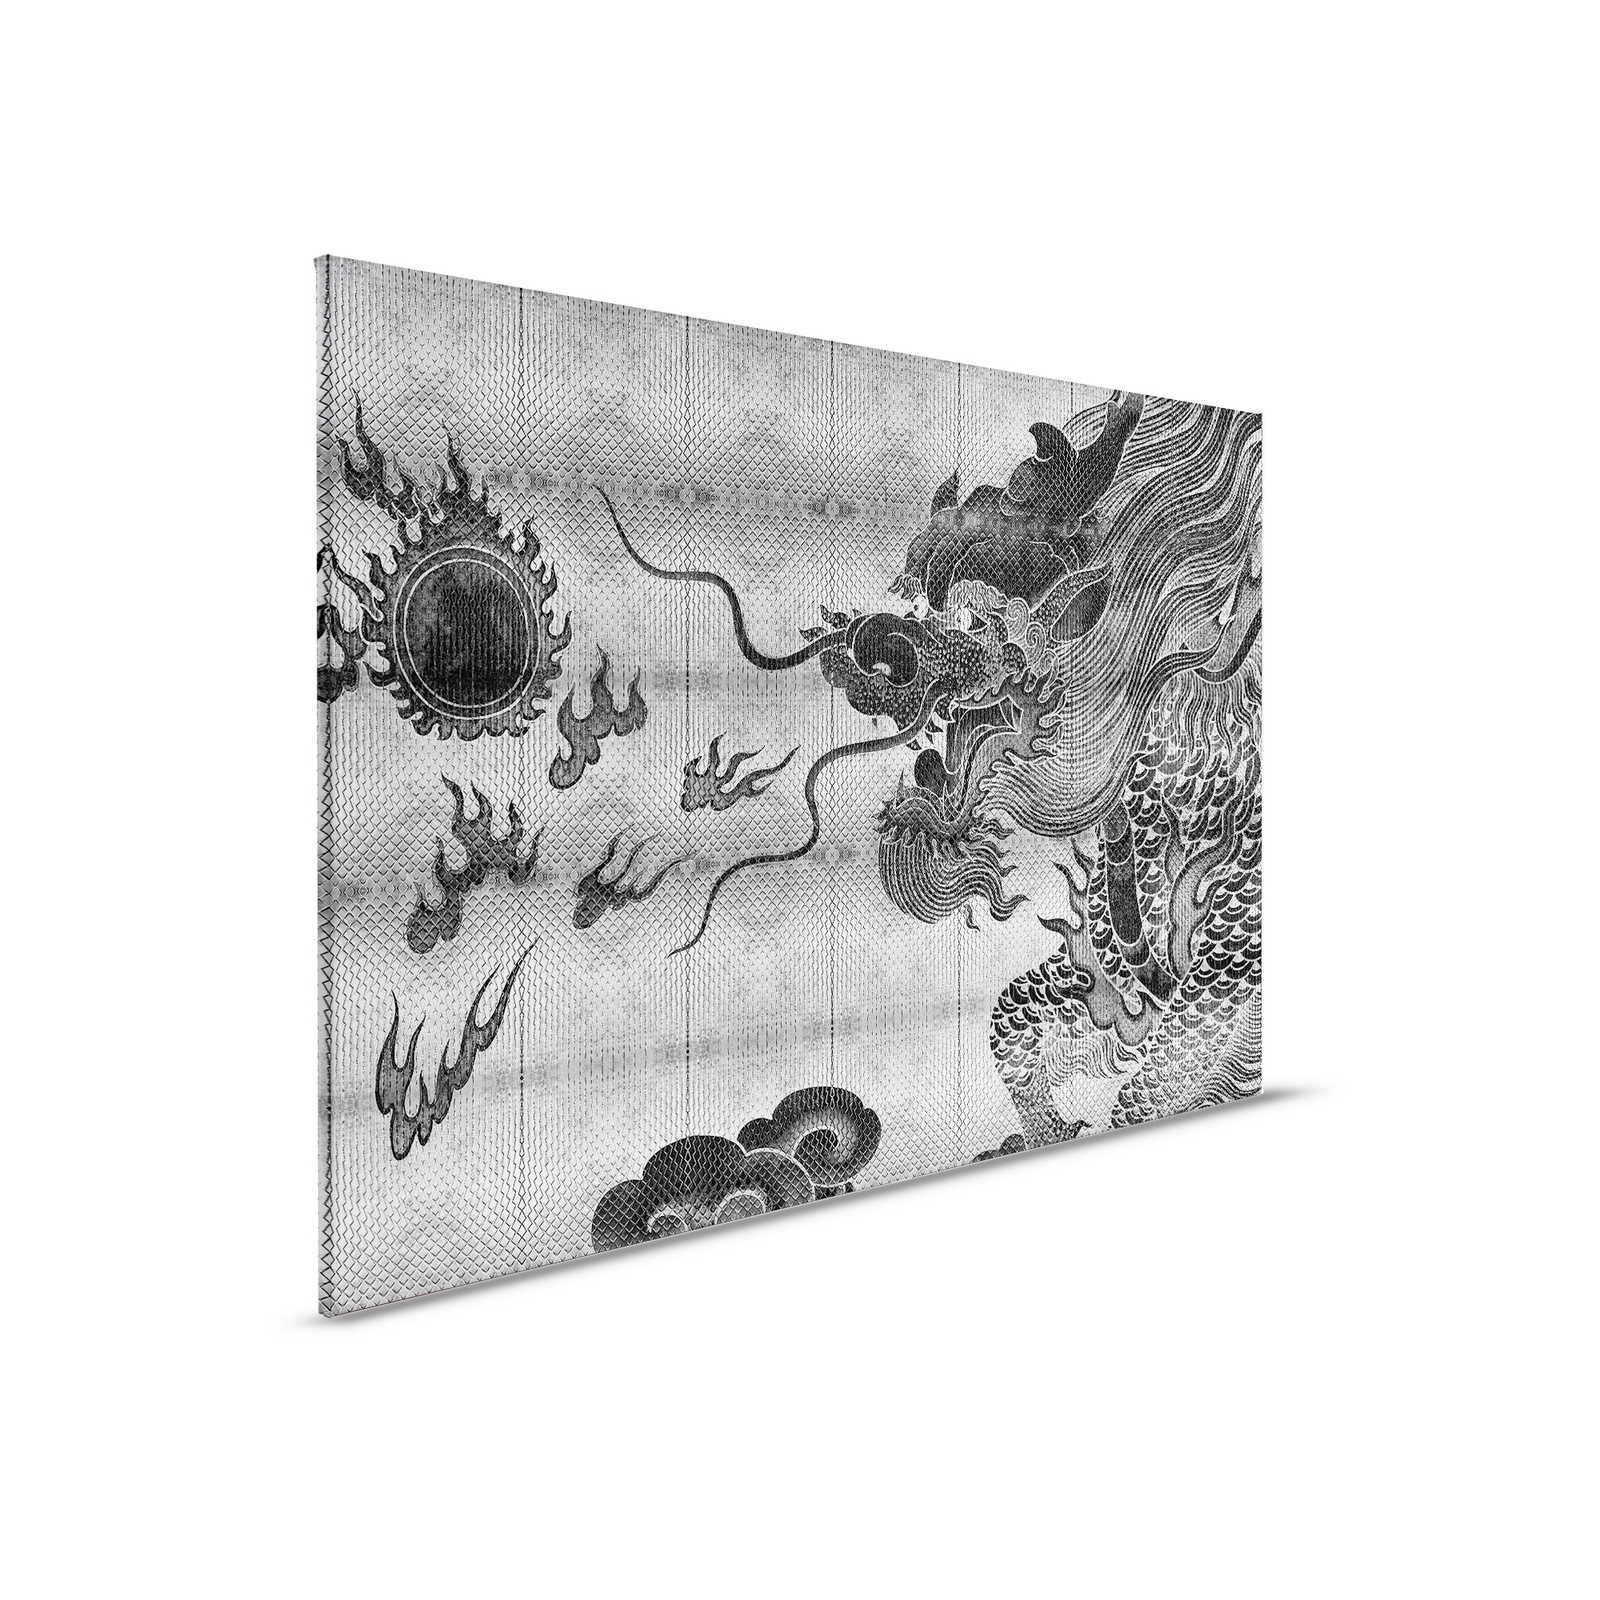 Shenzen 3 - Draak Canvas Schilderij Metallic Zilver Aziatische Stijl - 0.90 m x 0.60 m
